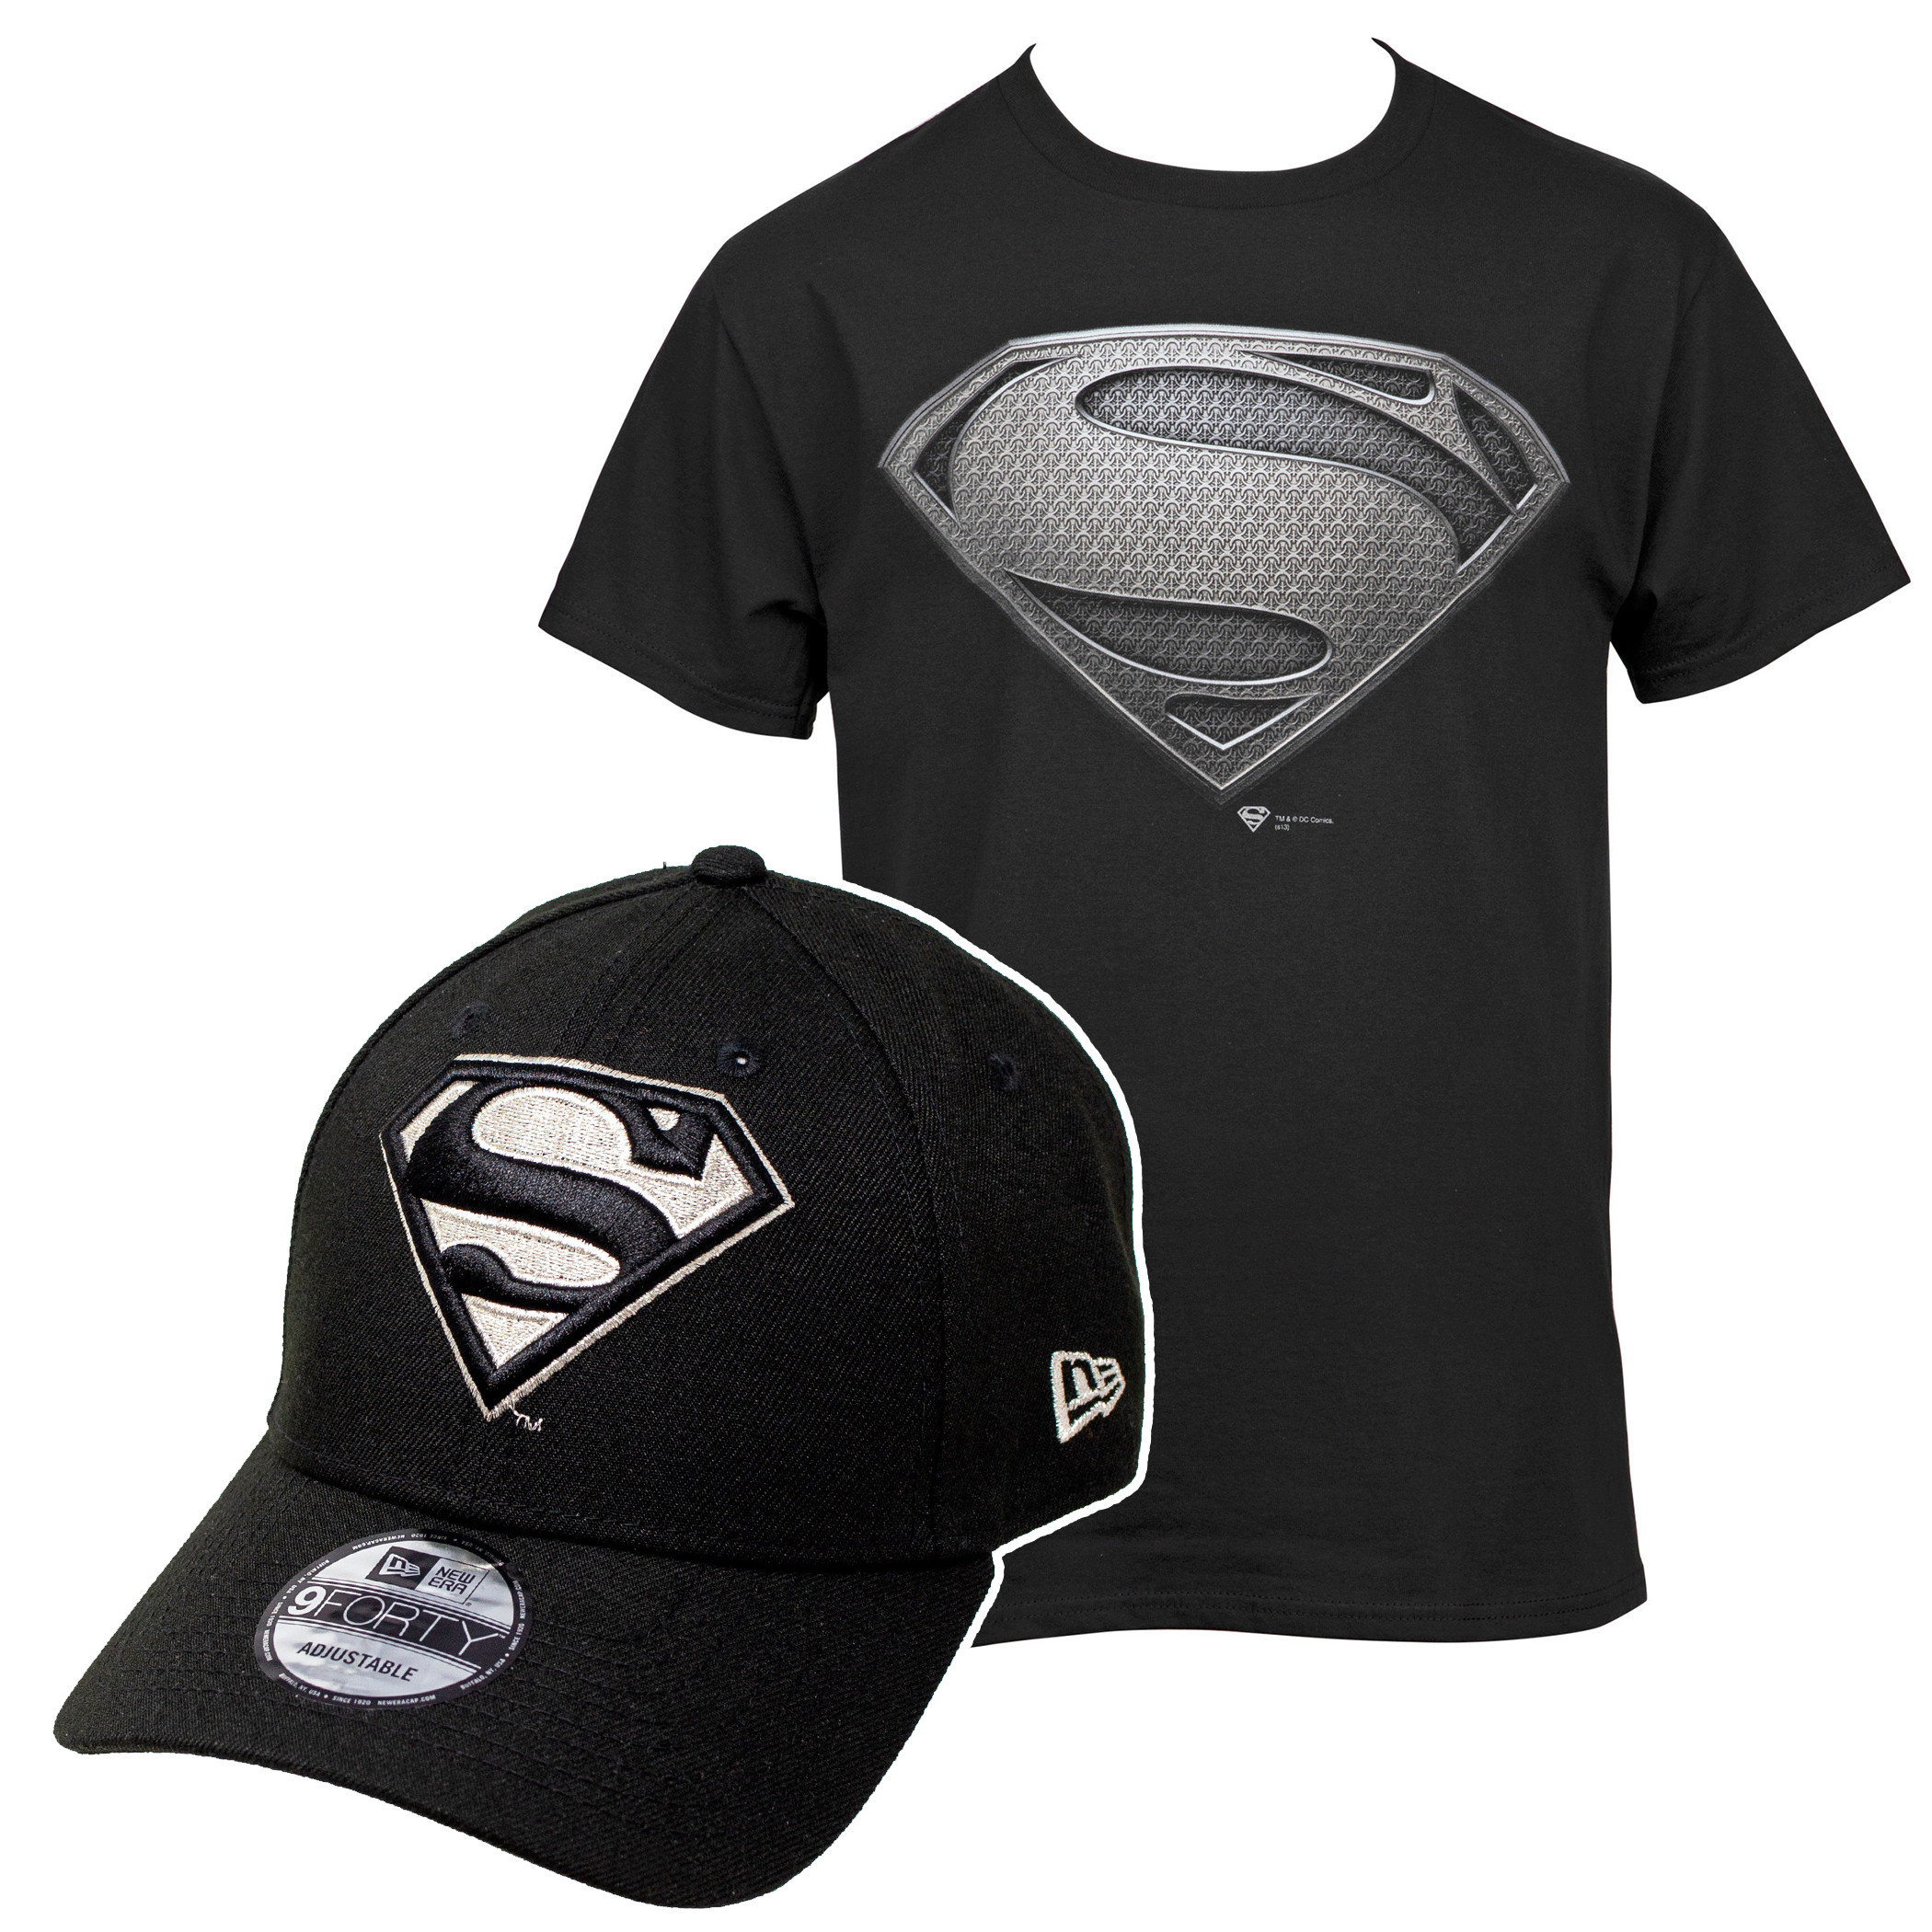 Superman Silver Logo and T-Shirt Bundle